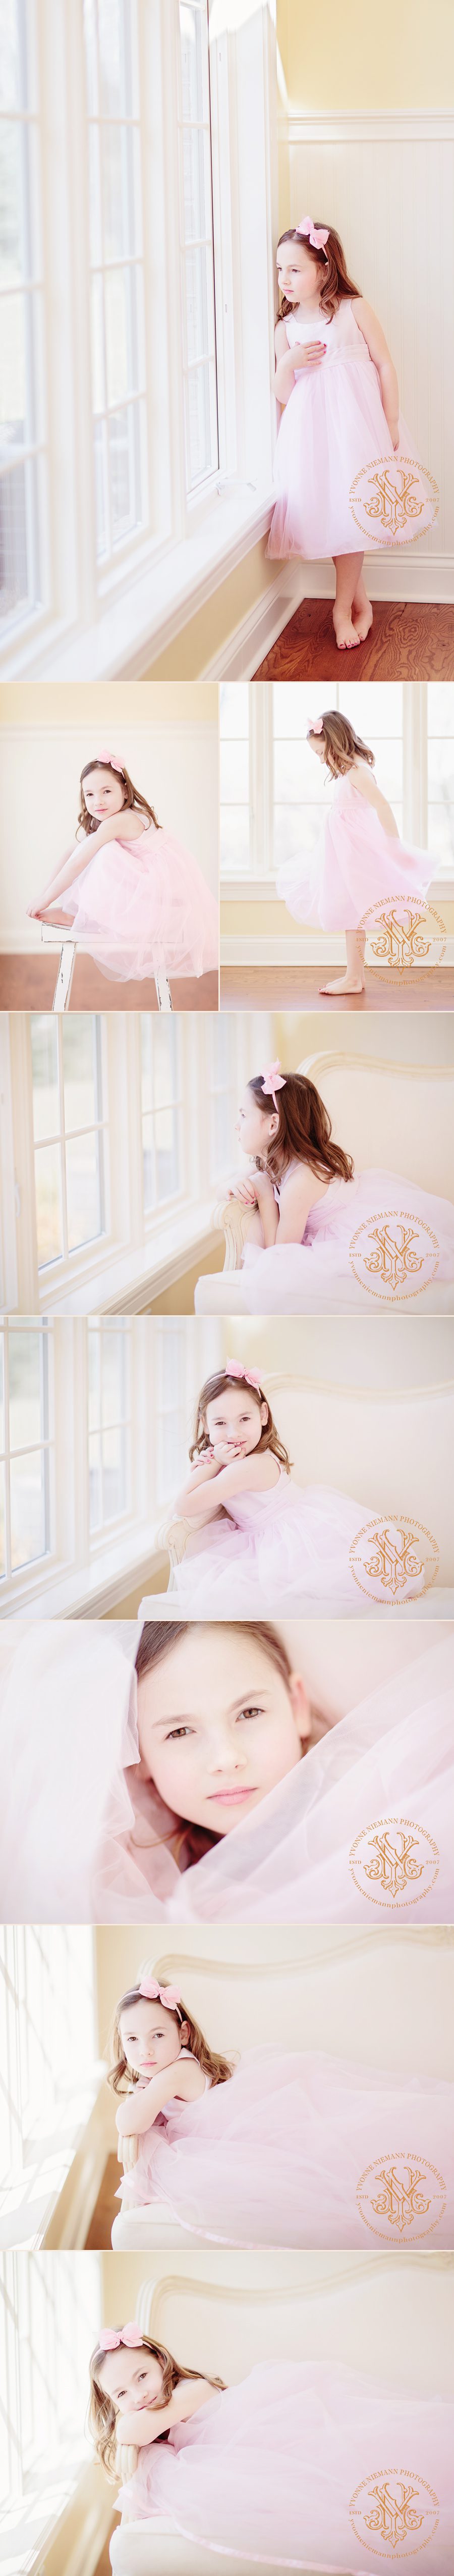 Beautiful Pastel Portraits of a Cute Little Girl taken by Yvonne Niemann Photography.